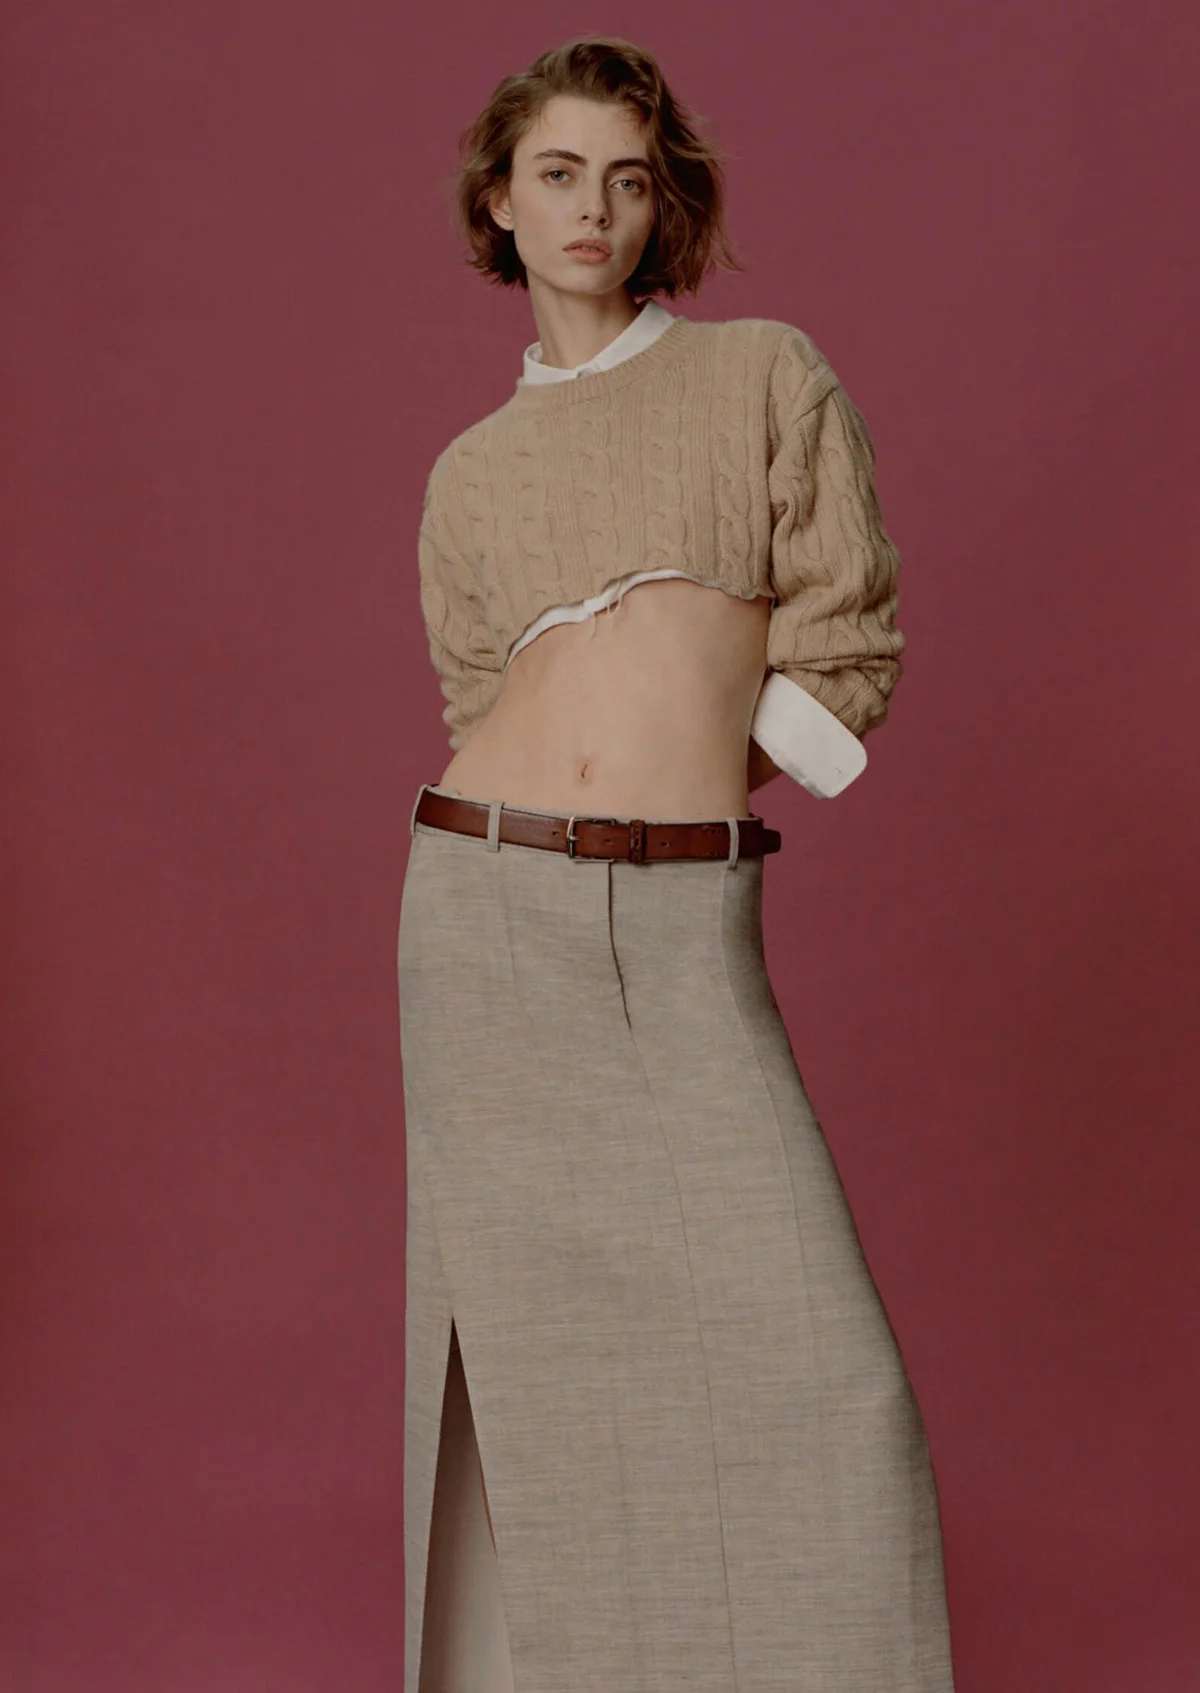 Patrycja Piekarska by Matt Healy for British Vogue April 2022